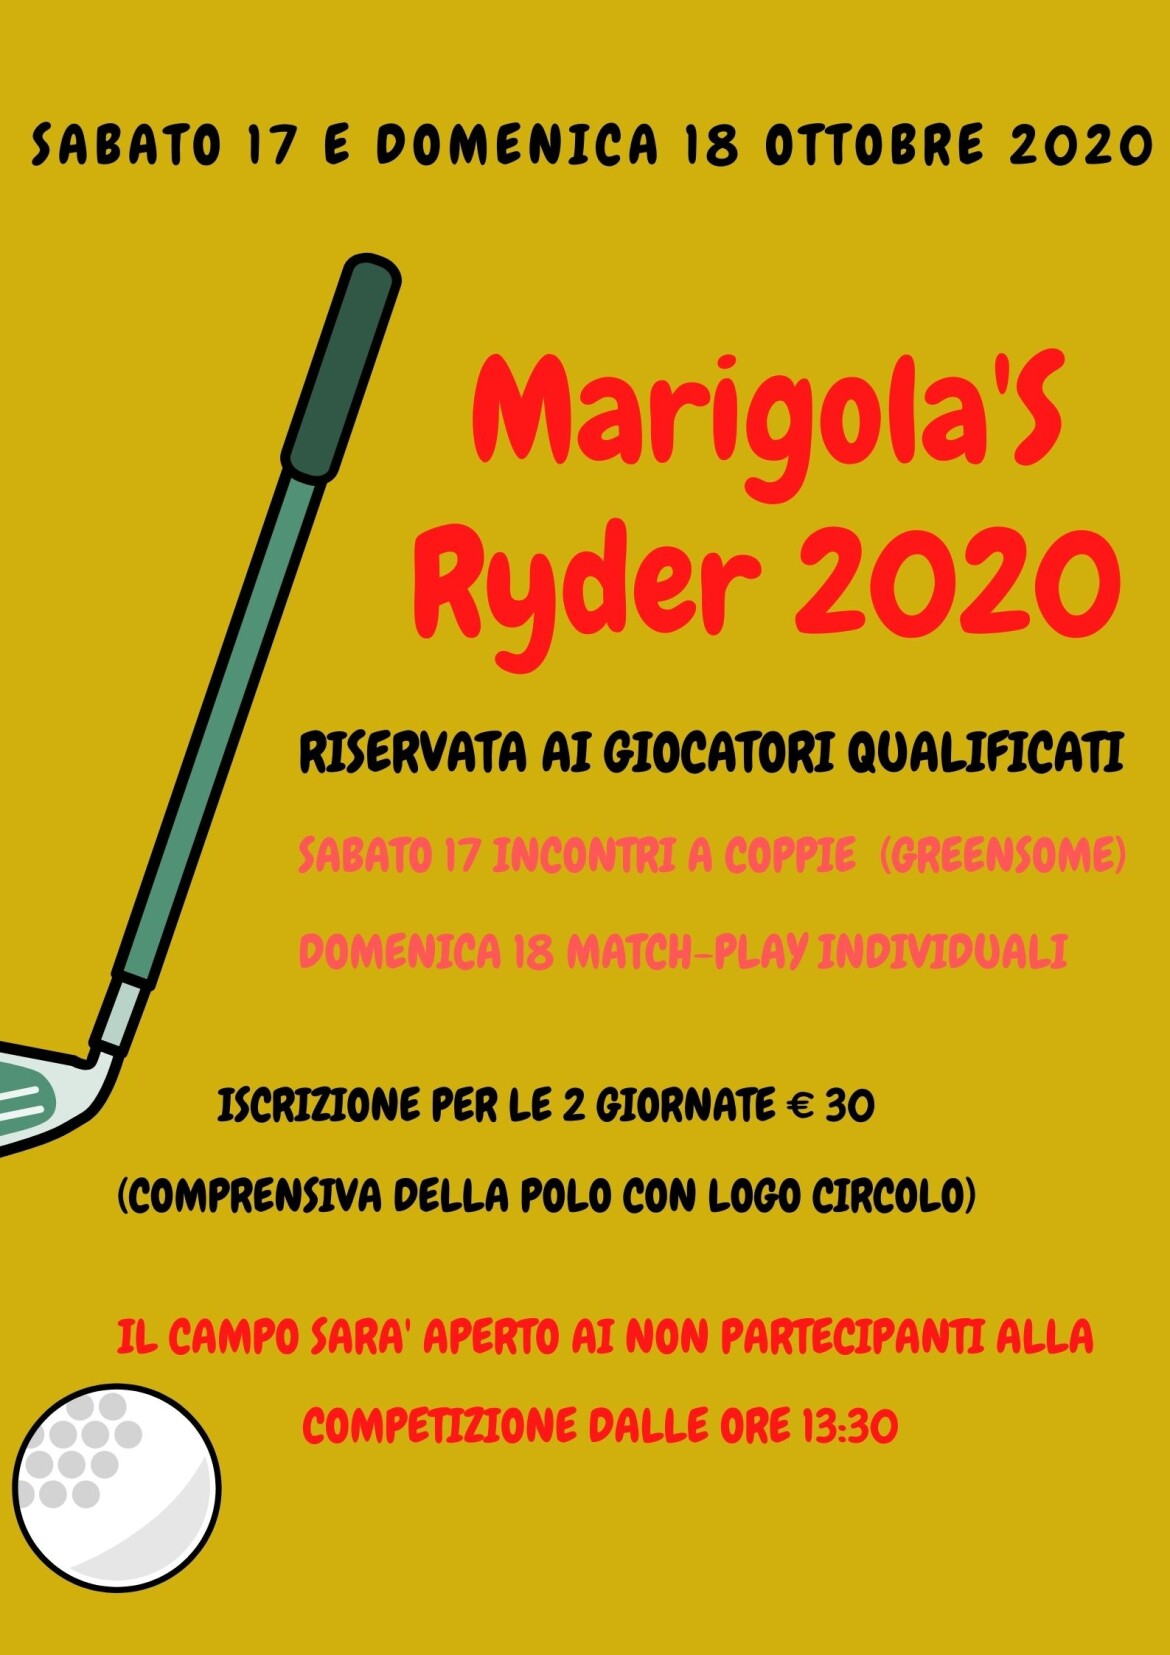 Marigola’s Ryder 2020